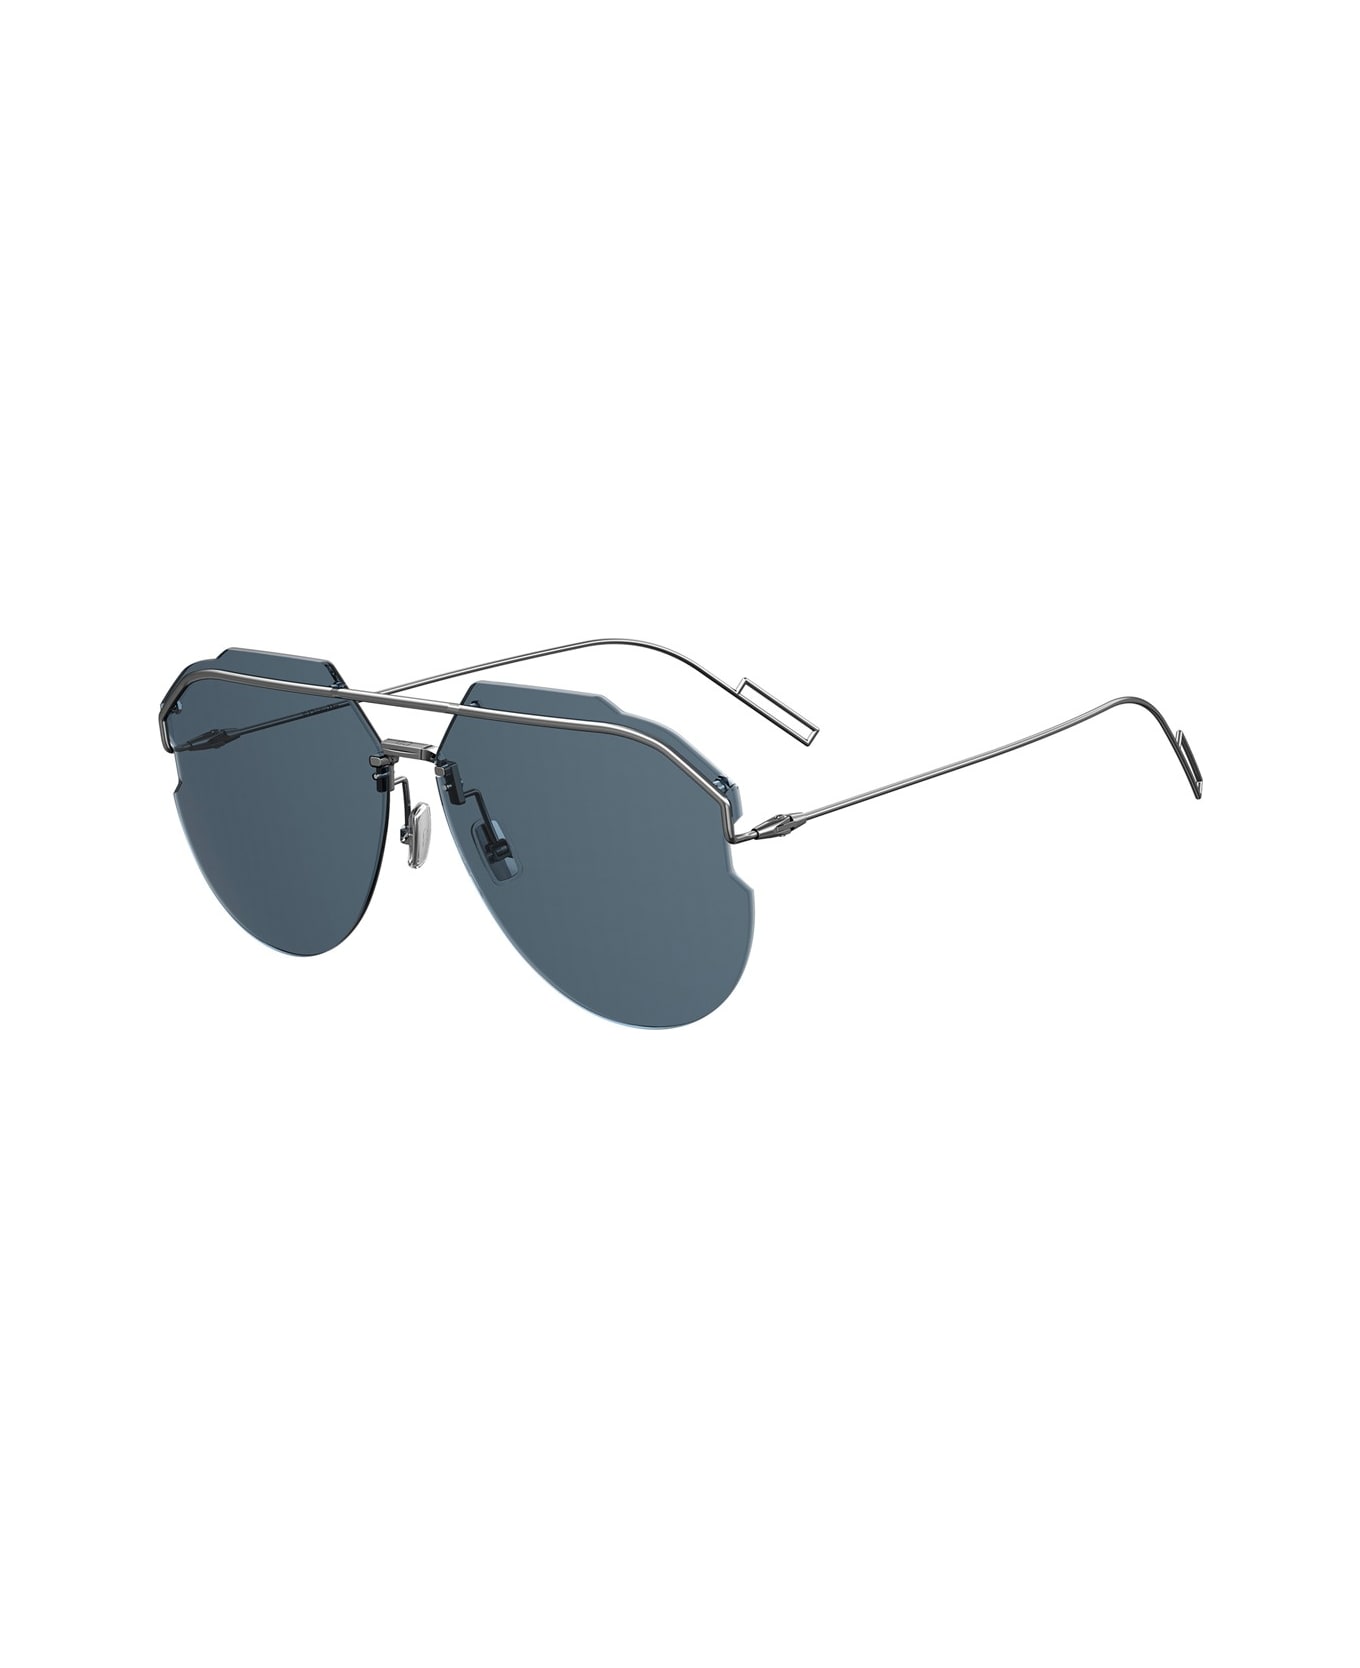 Dior Eyewear Andiorid Sunglasses - Argento